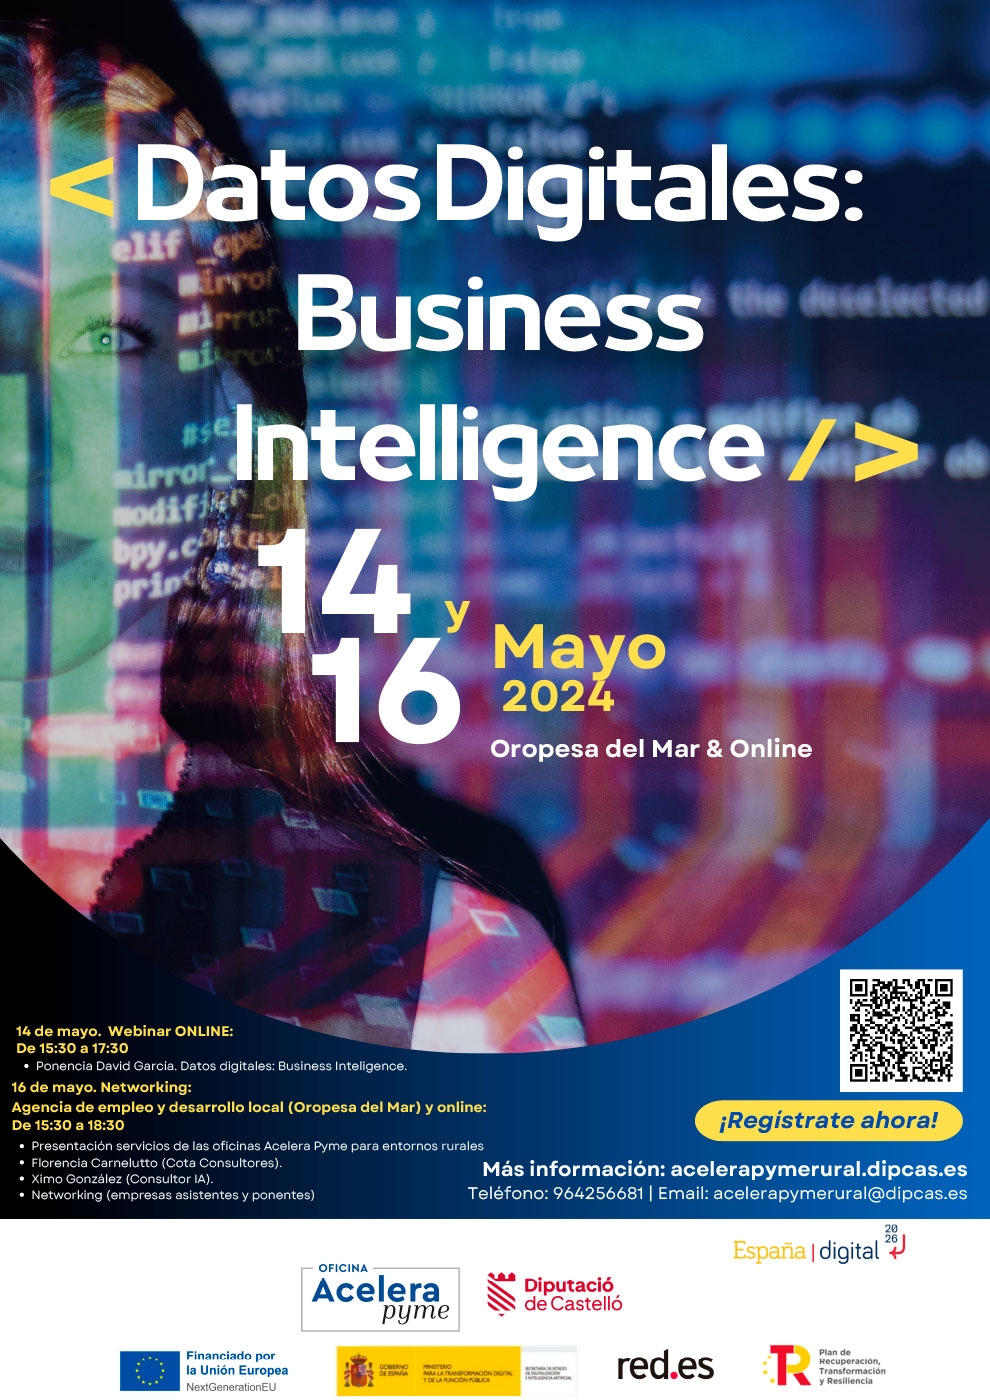 Dades Digitals: Business Intelligence